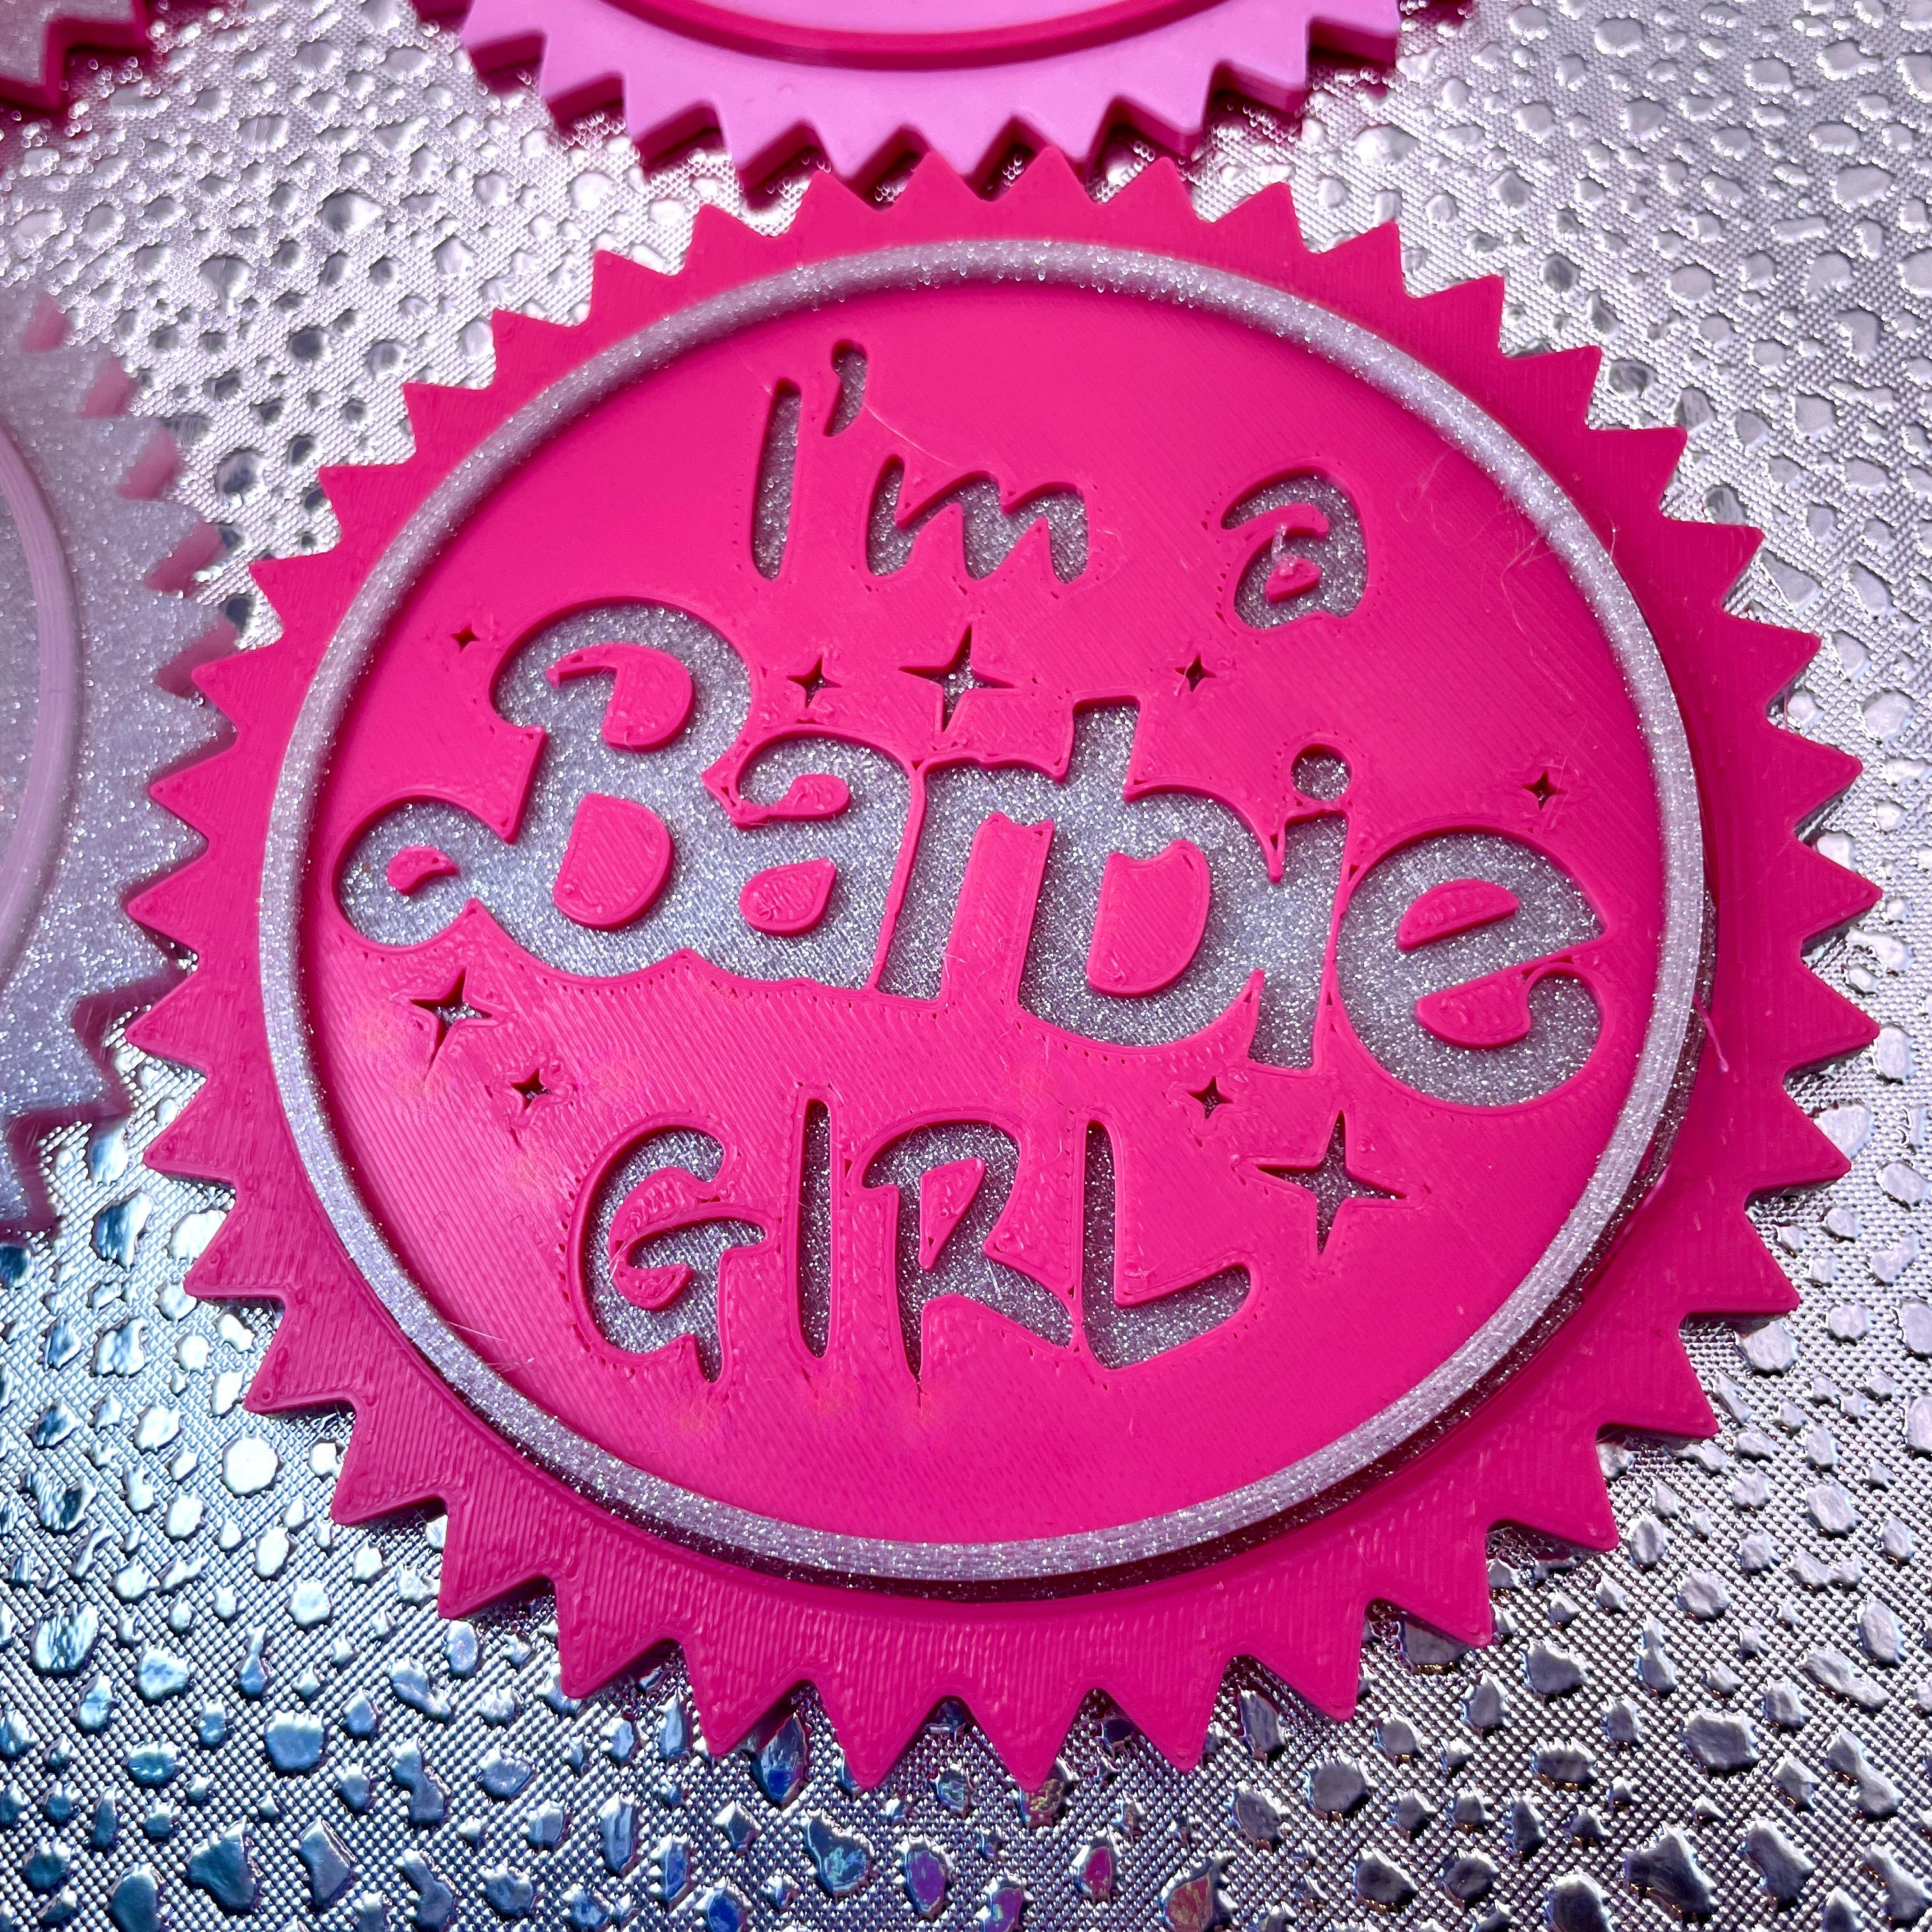 Barbie Dream Coasters - Love these!  So fun!
 - 3d model